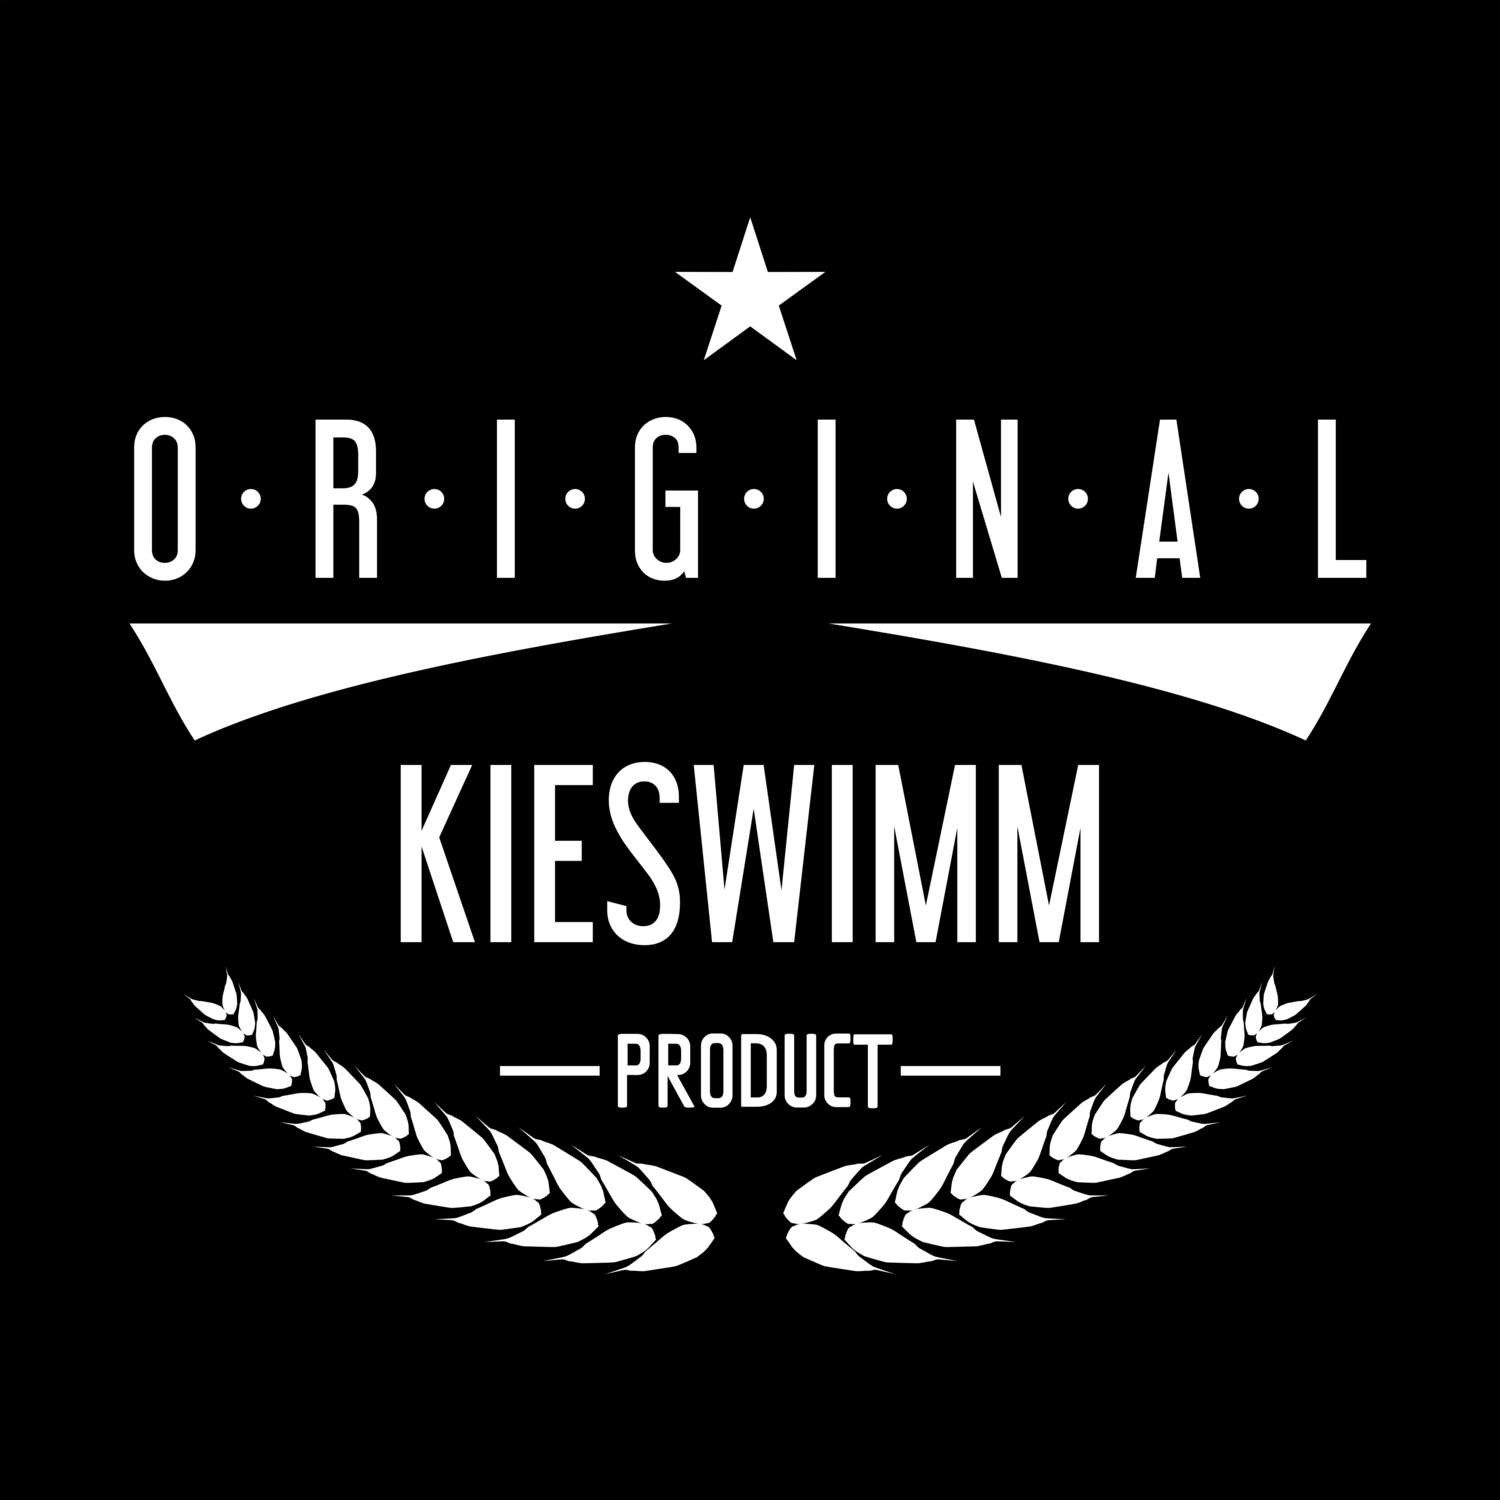 Kieswimm T-Shirt »Original Product«